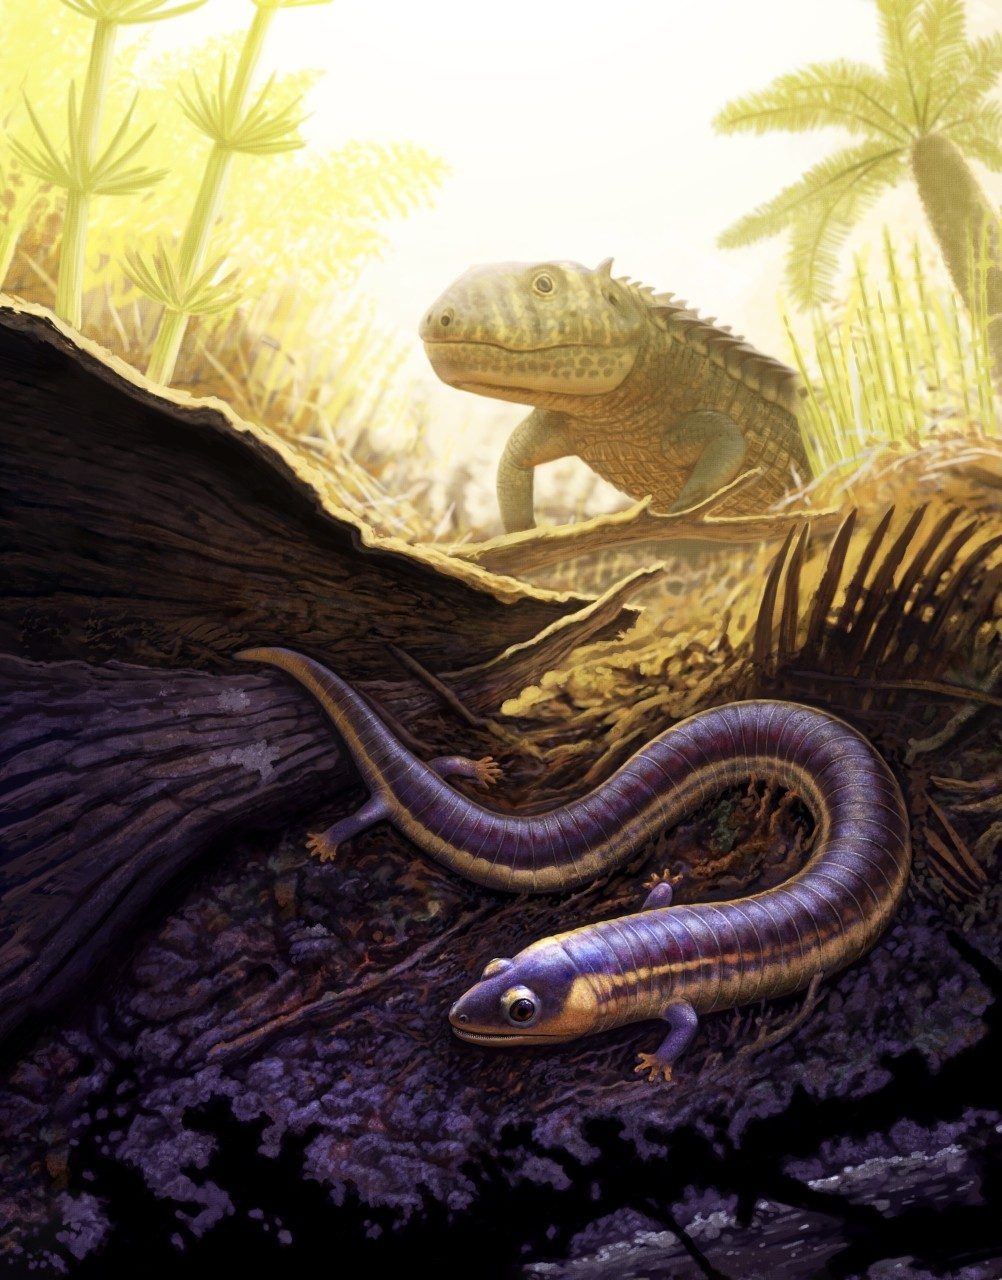 New geosciences study shows Triassic fossils that reveal origins of living amphibians